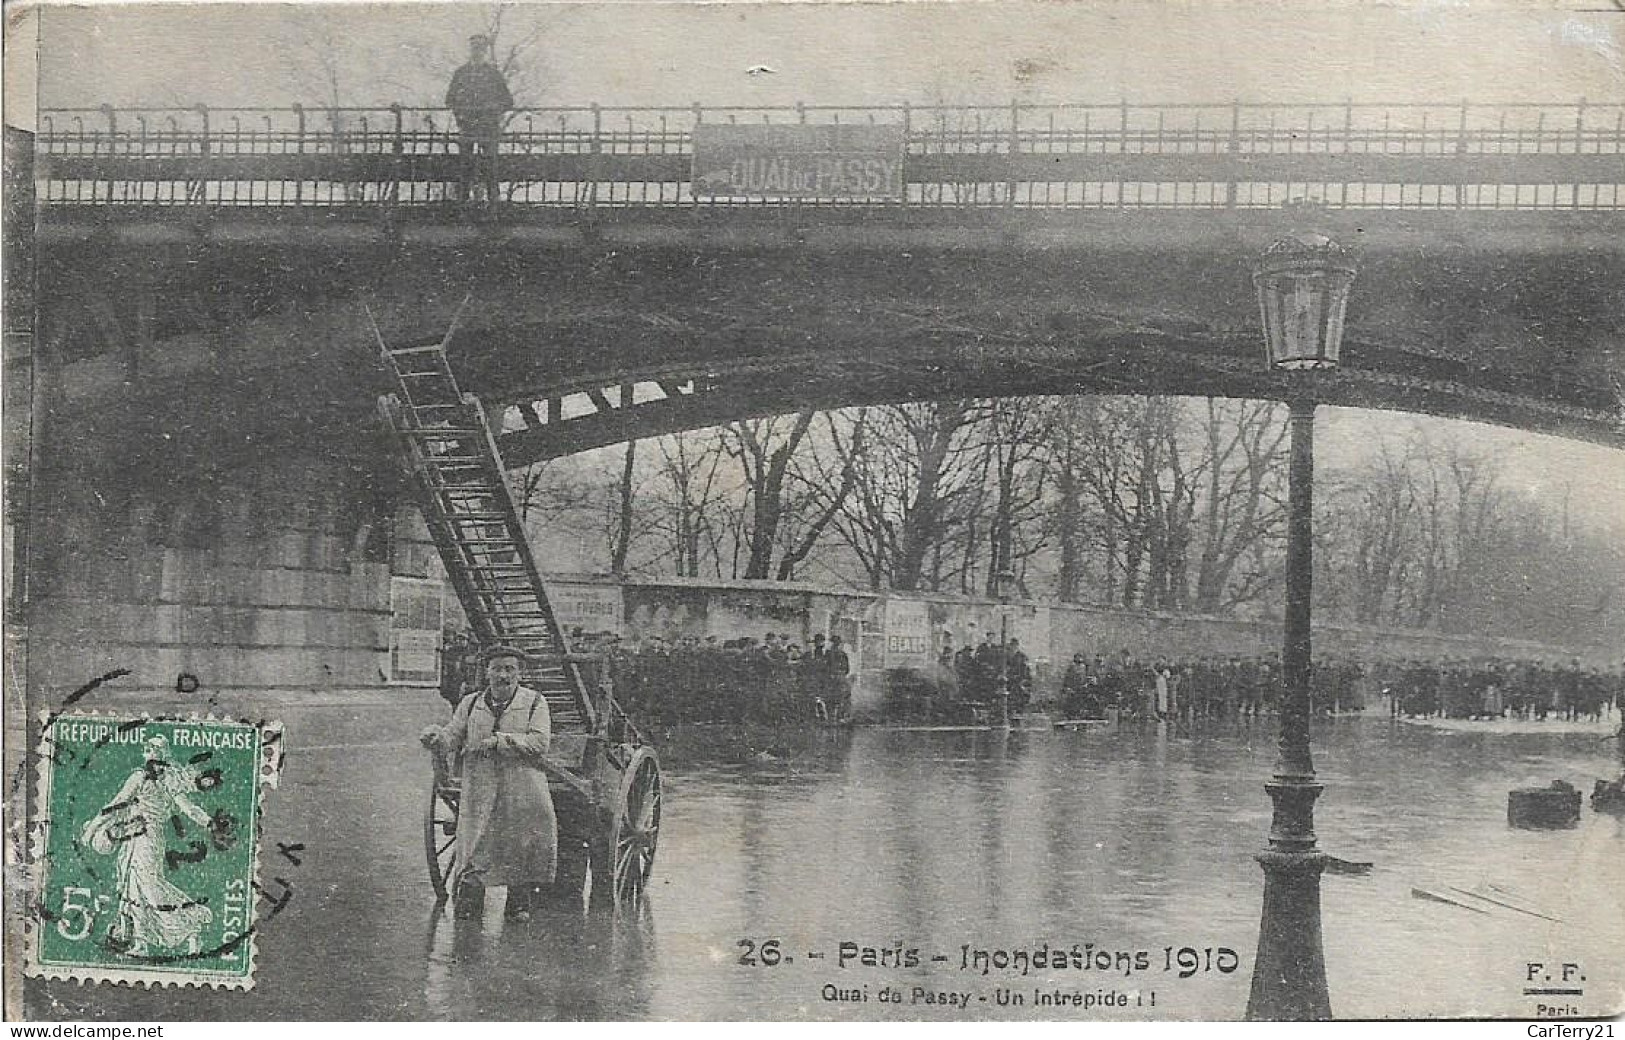 75. PARIS. INONDATIONS 1910. QUAI DE PASSY. UN INTREPIDE. - Paris Flood, 1910